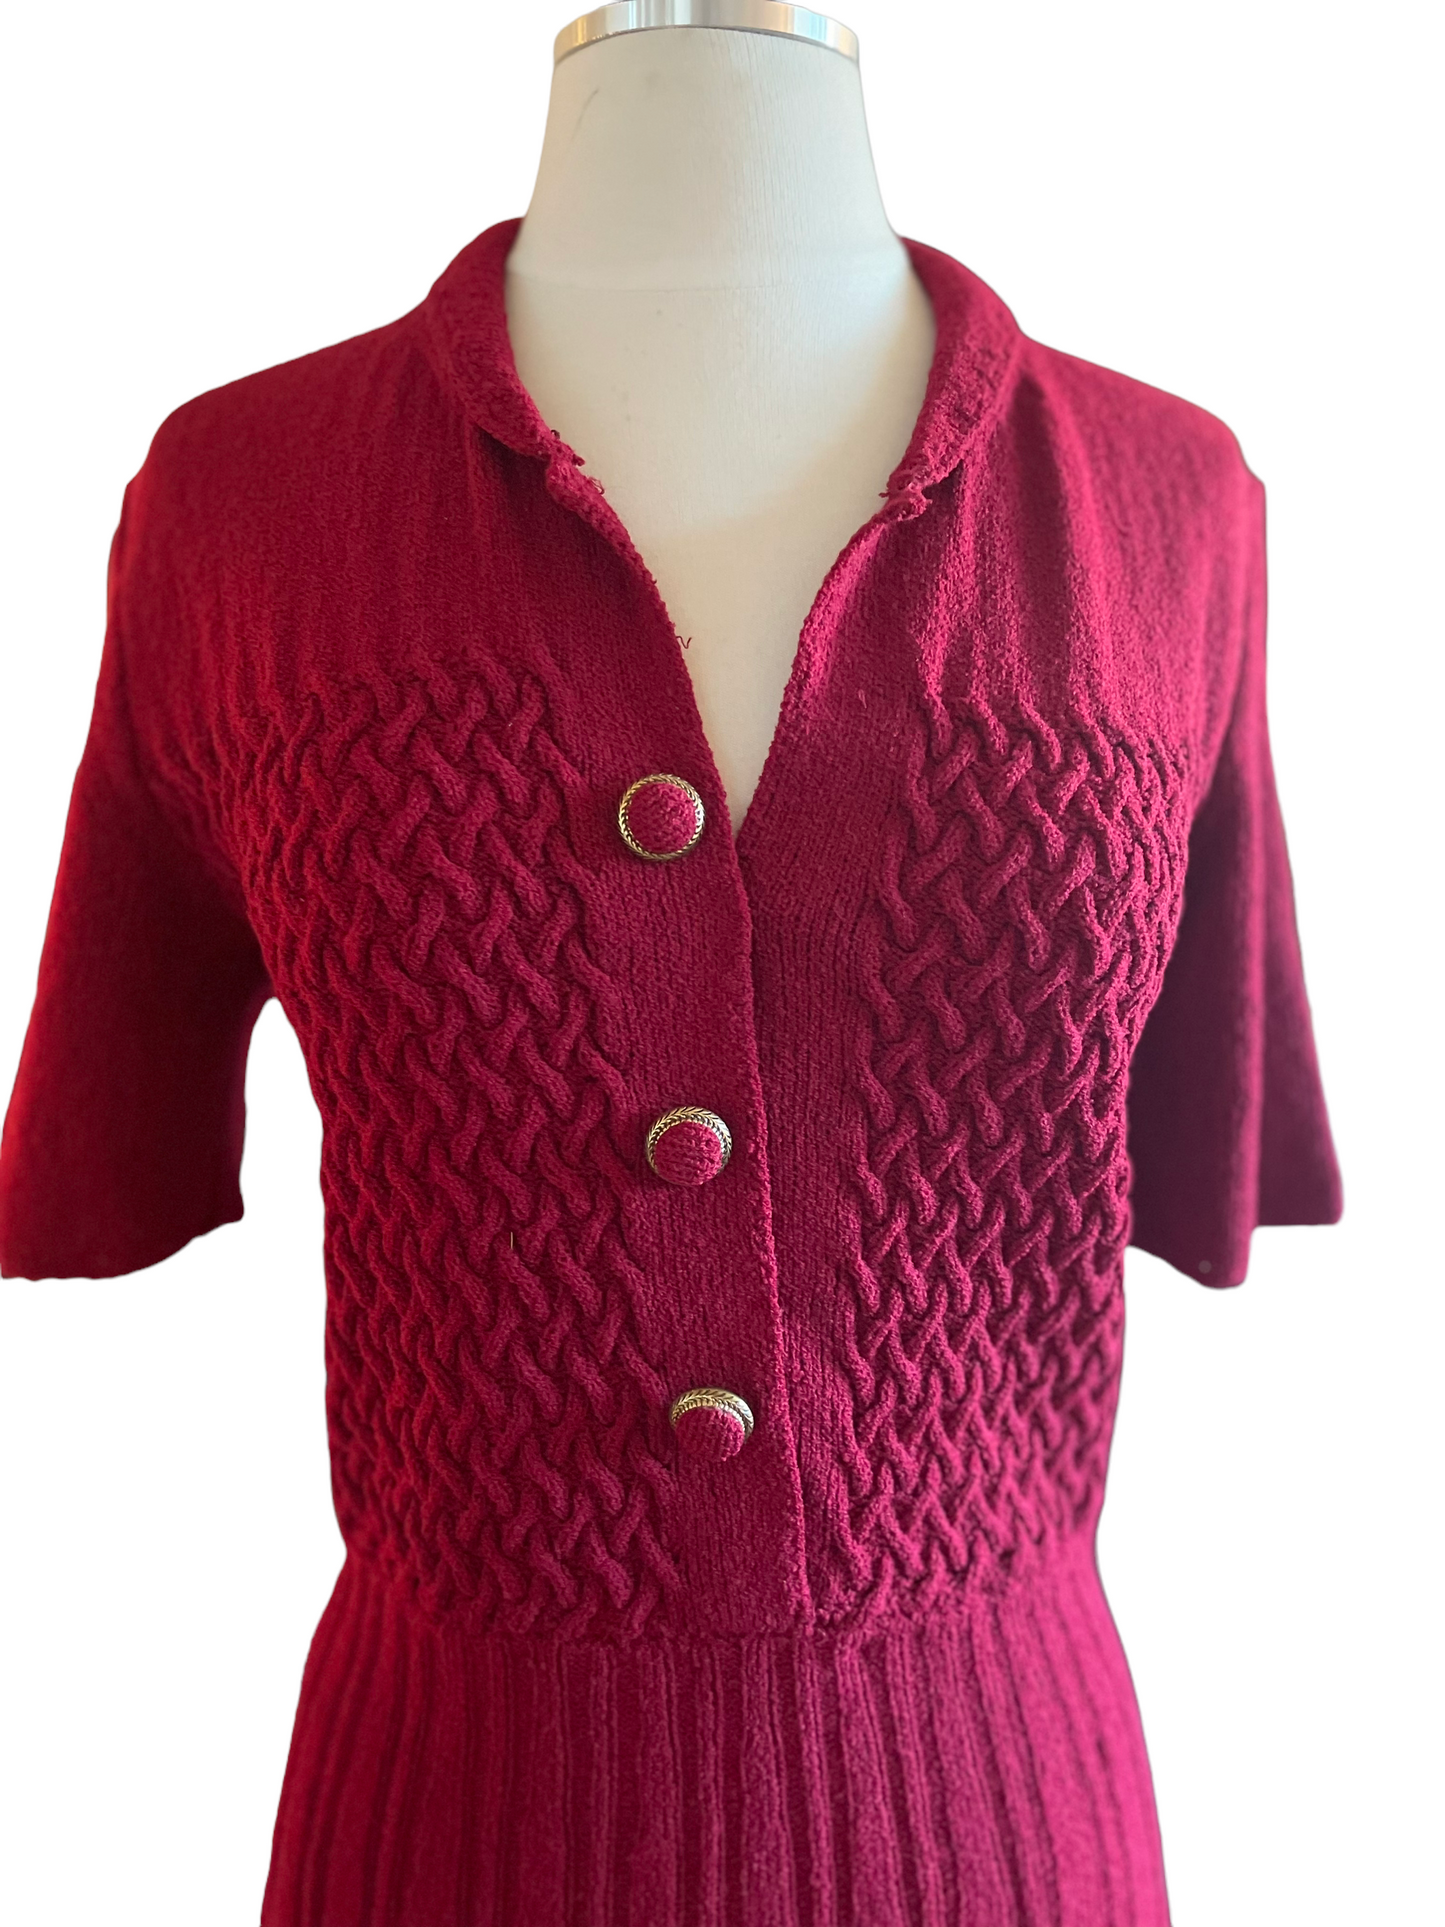 Vintage 1940s Hand-Knit Red Dress SZ S |  Barn Owl Vintage | Seattle Vintage Dresses Front upper view.